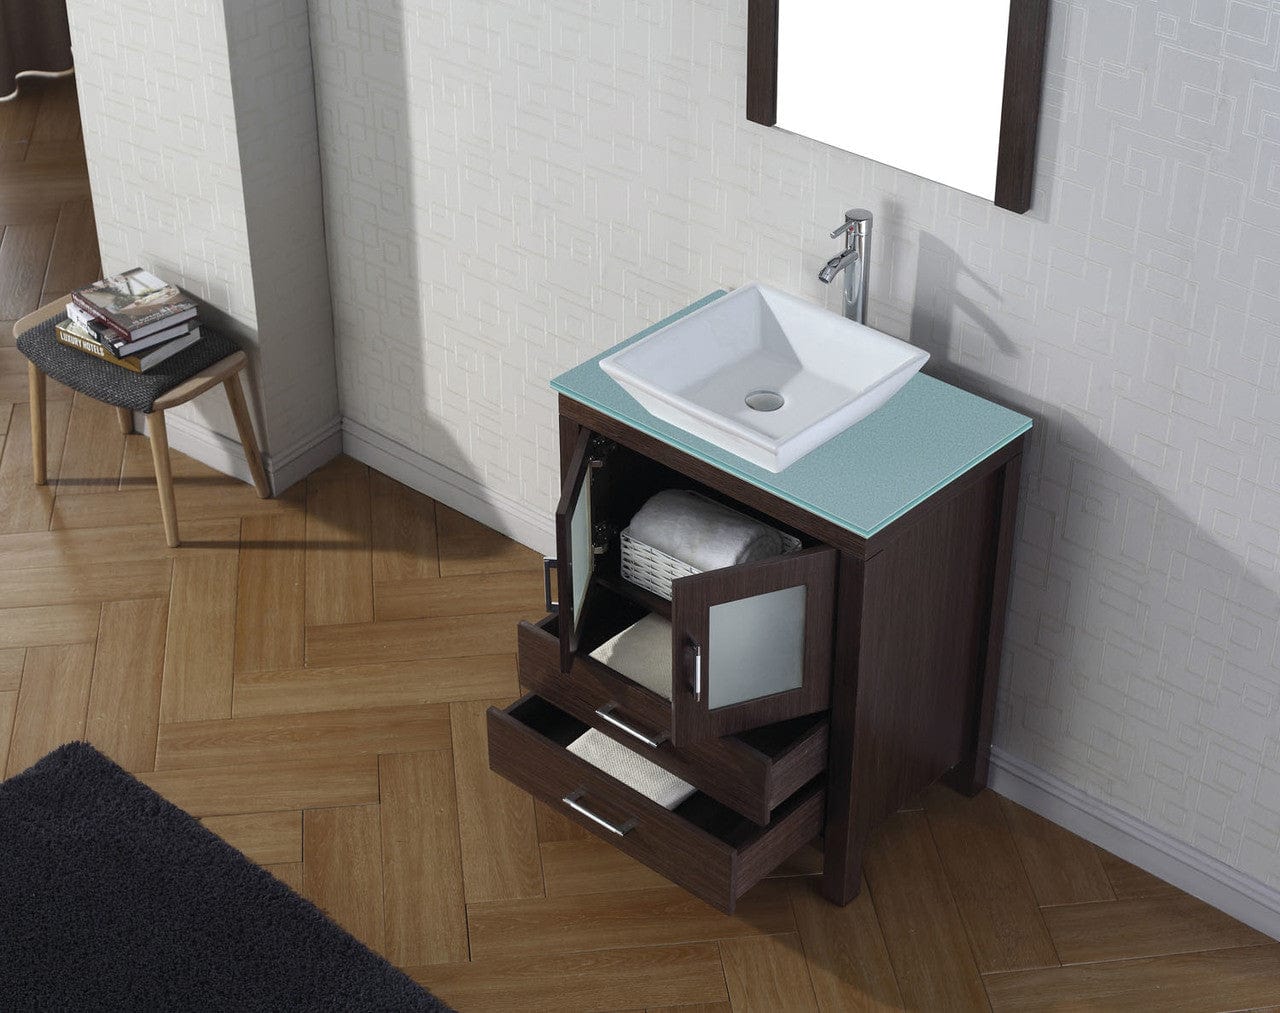 Virtu USA Dior 28 Single Bathroom Vanity in Espresso w/ Aqua Tempered Glass Top & Square Sink